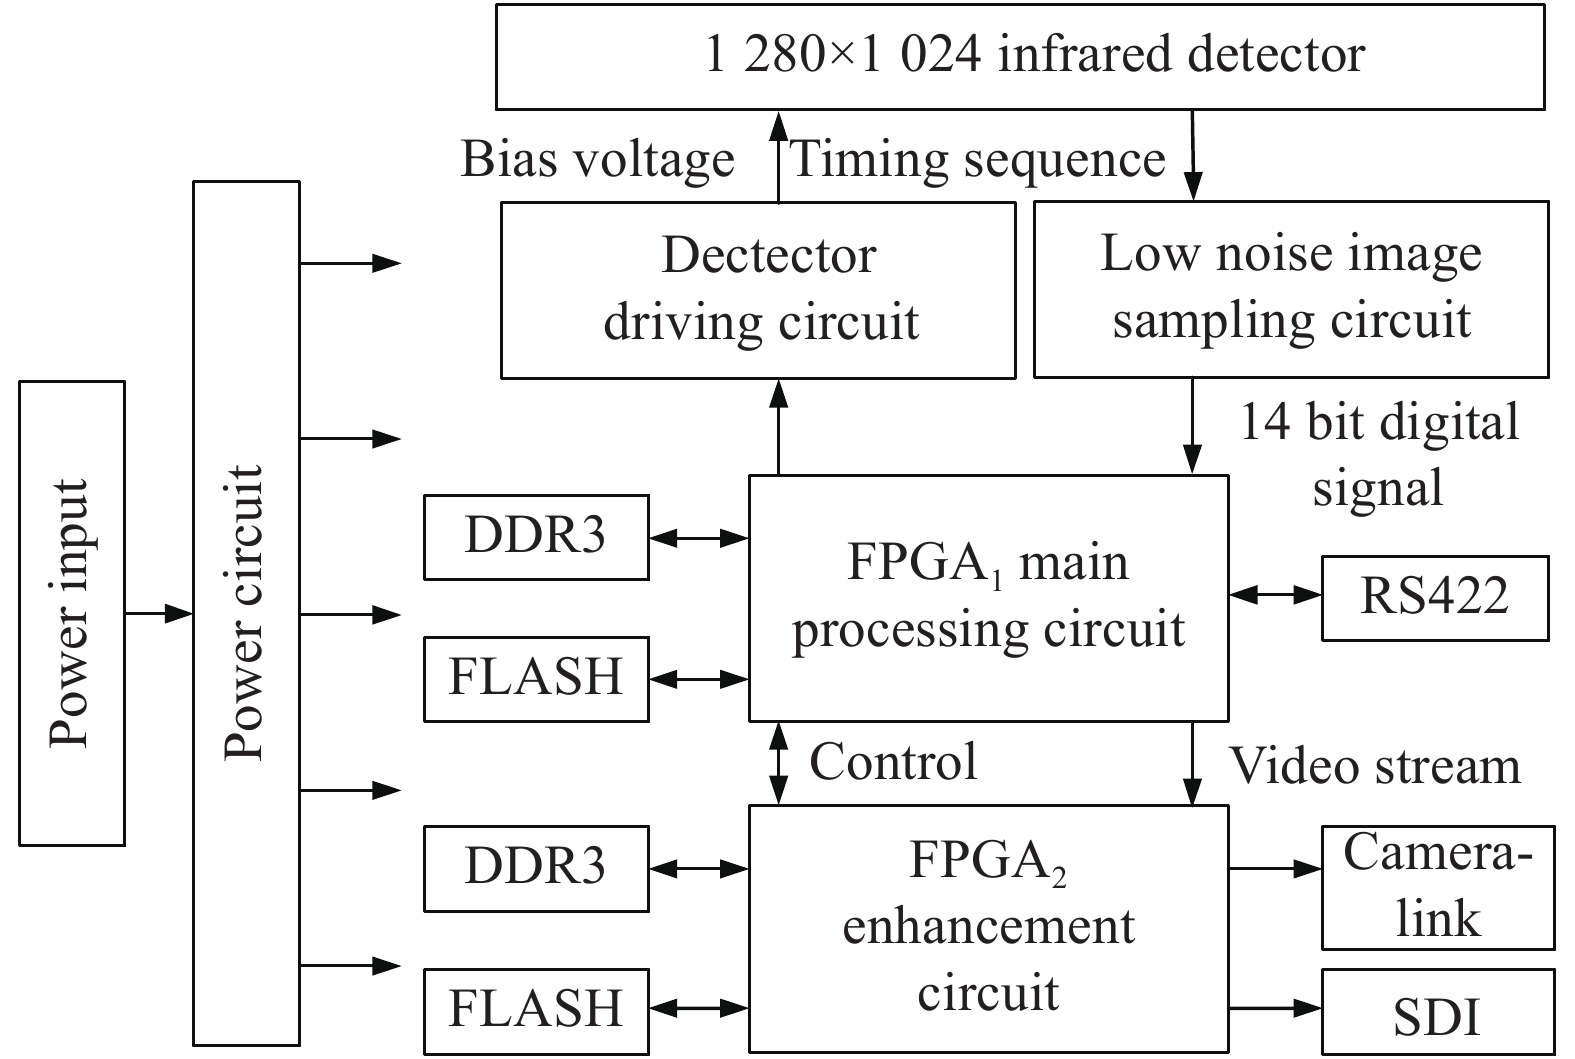 Image processing circuit hardware design